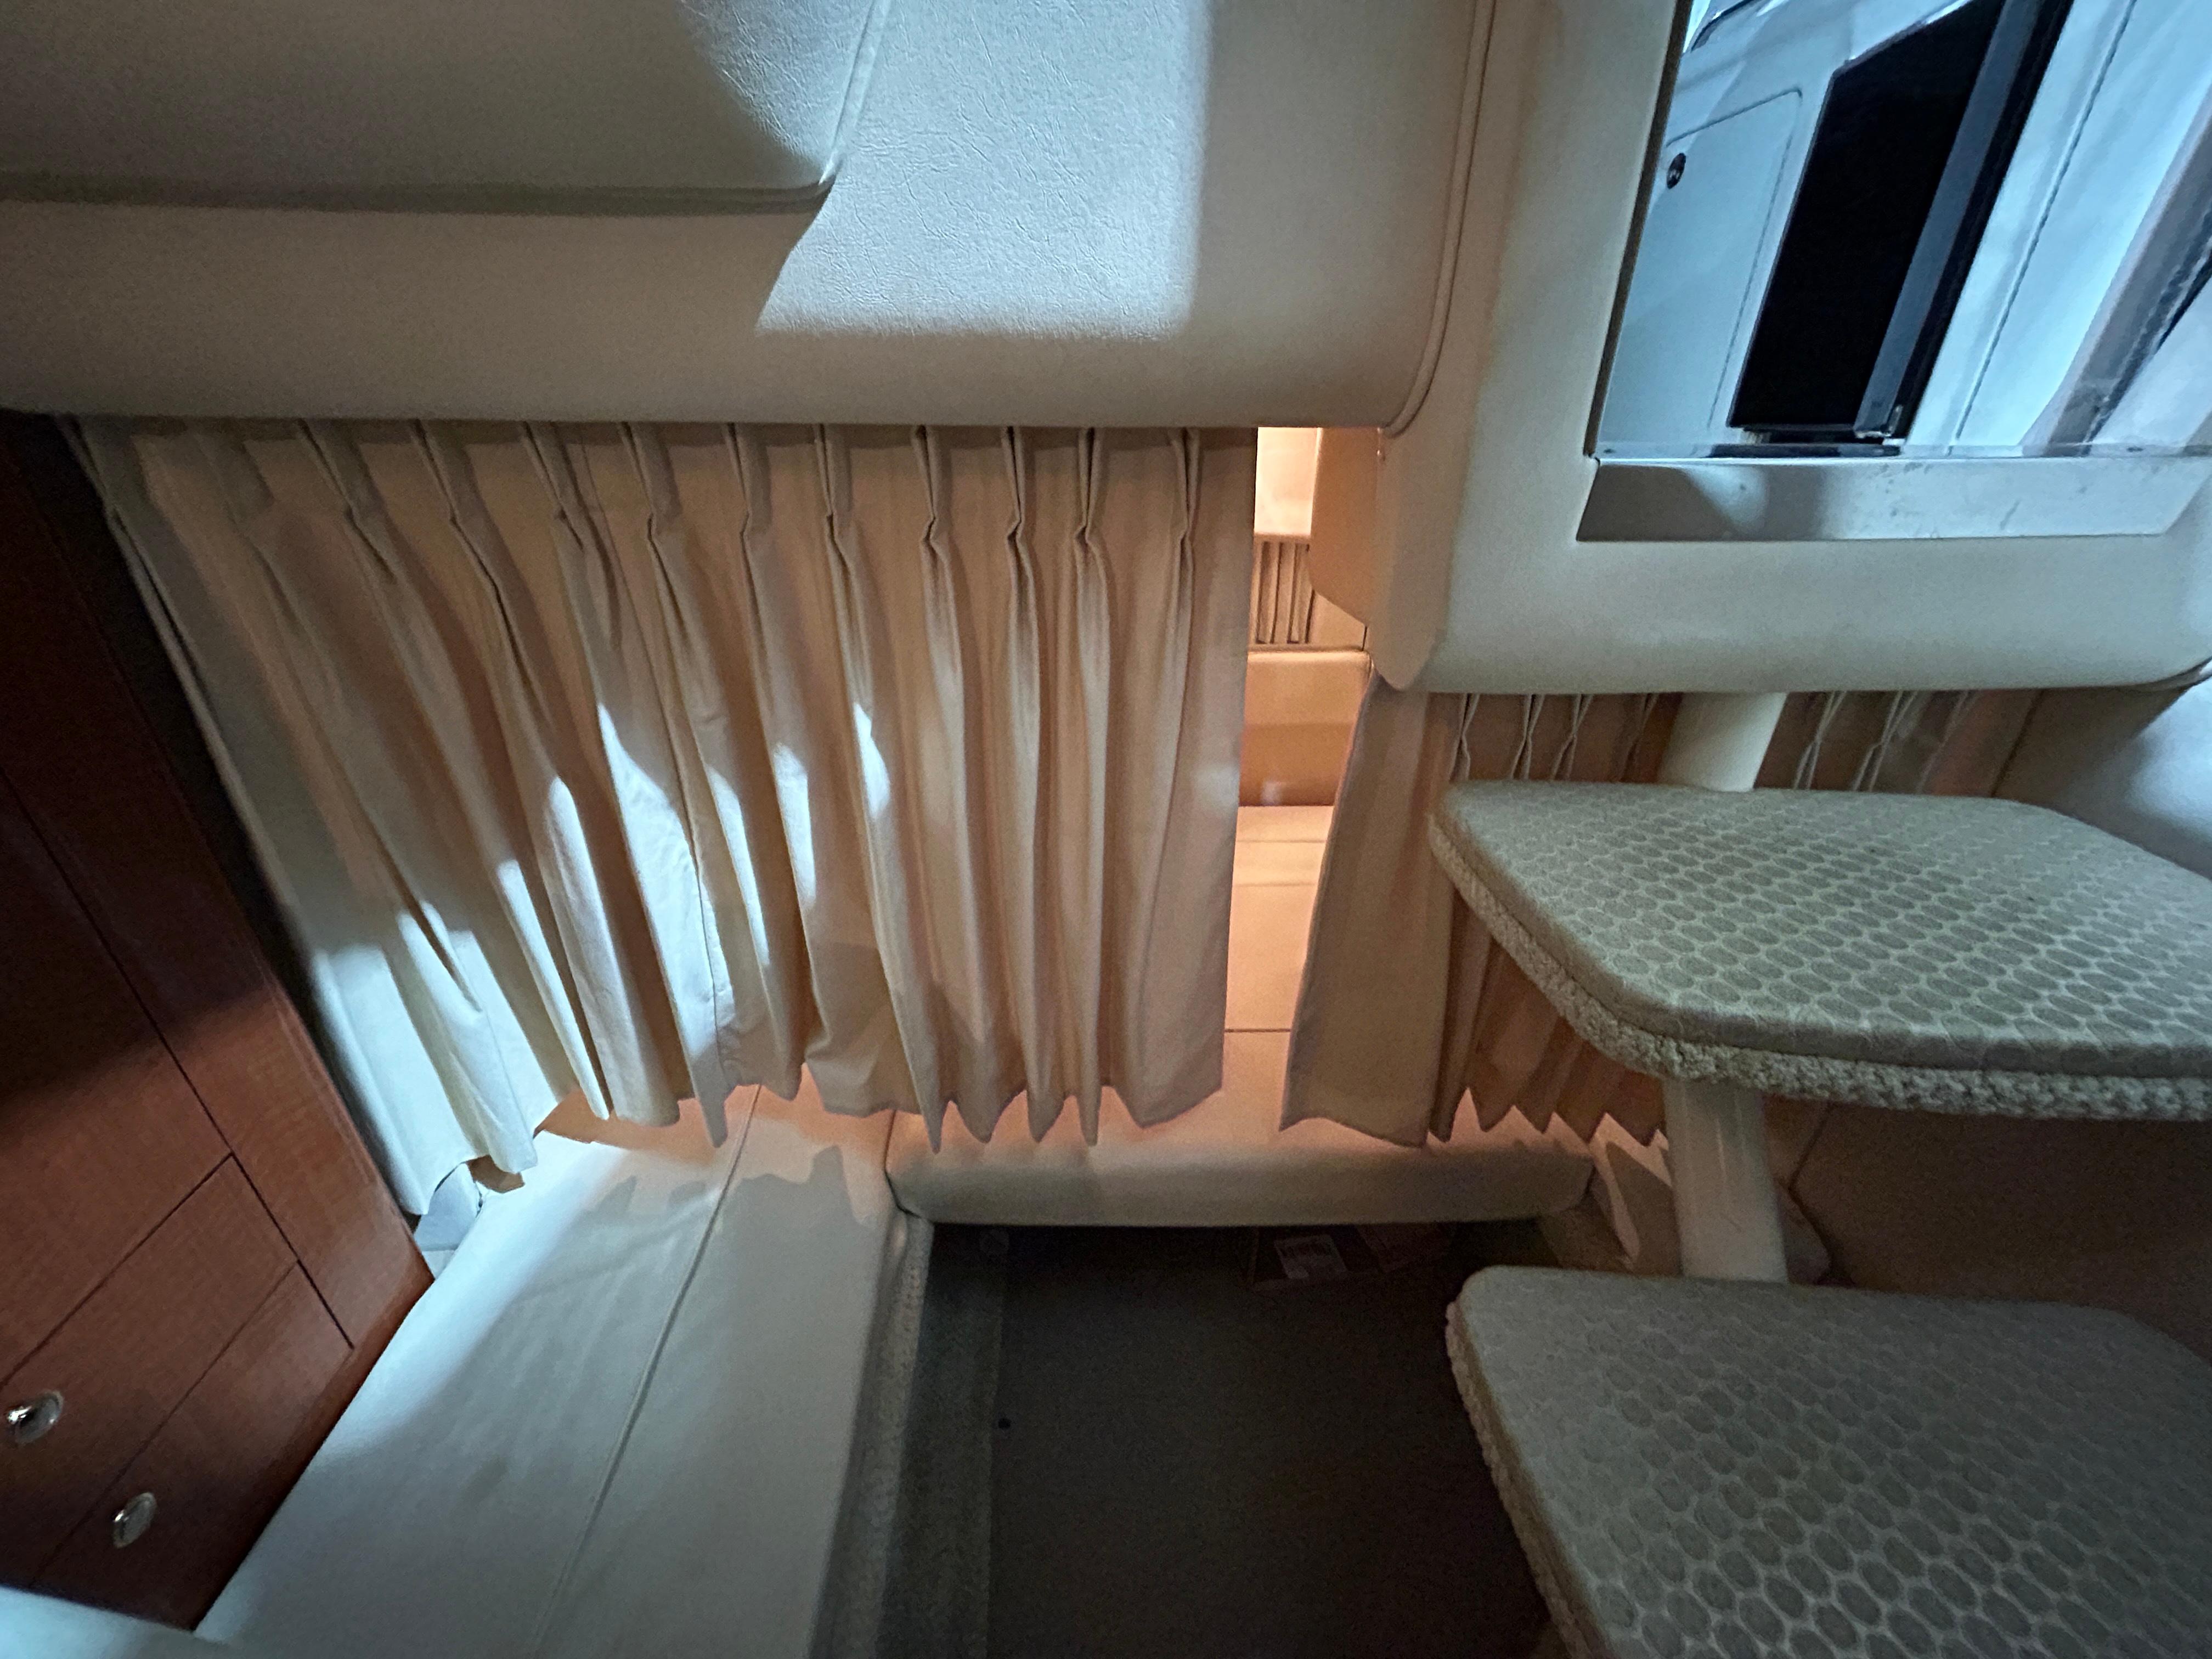 Mid-Cabin Privacy Curtain 